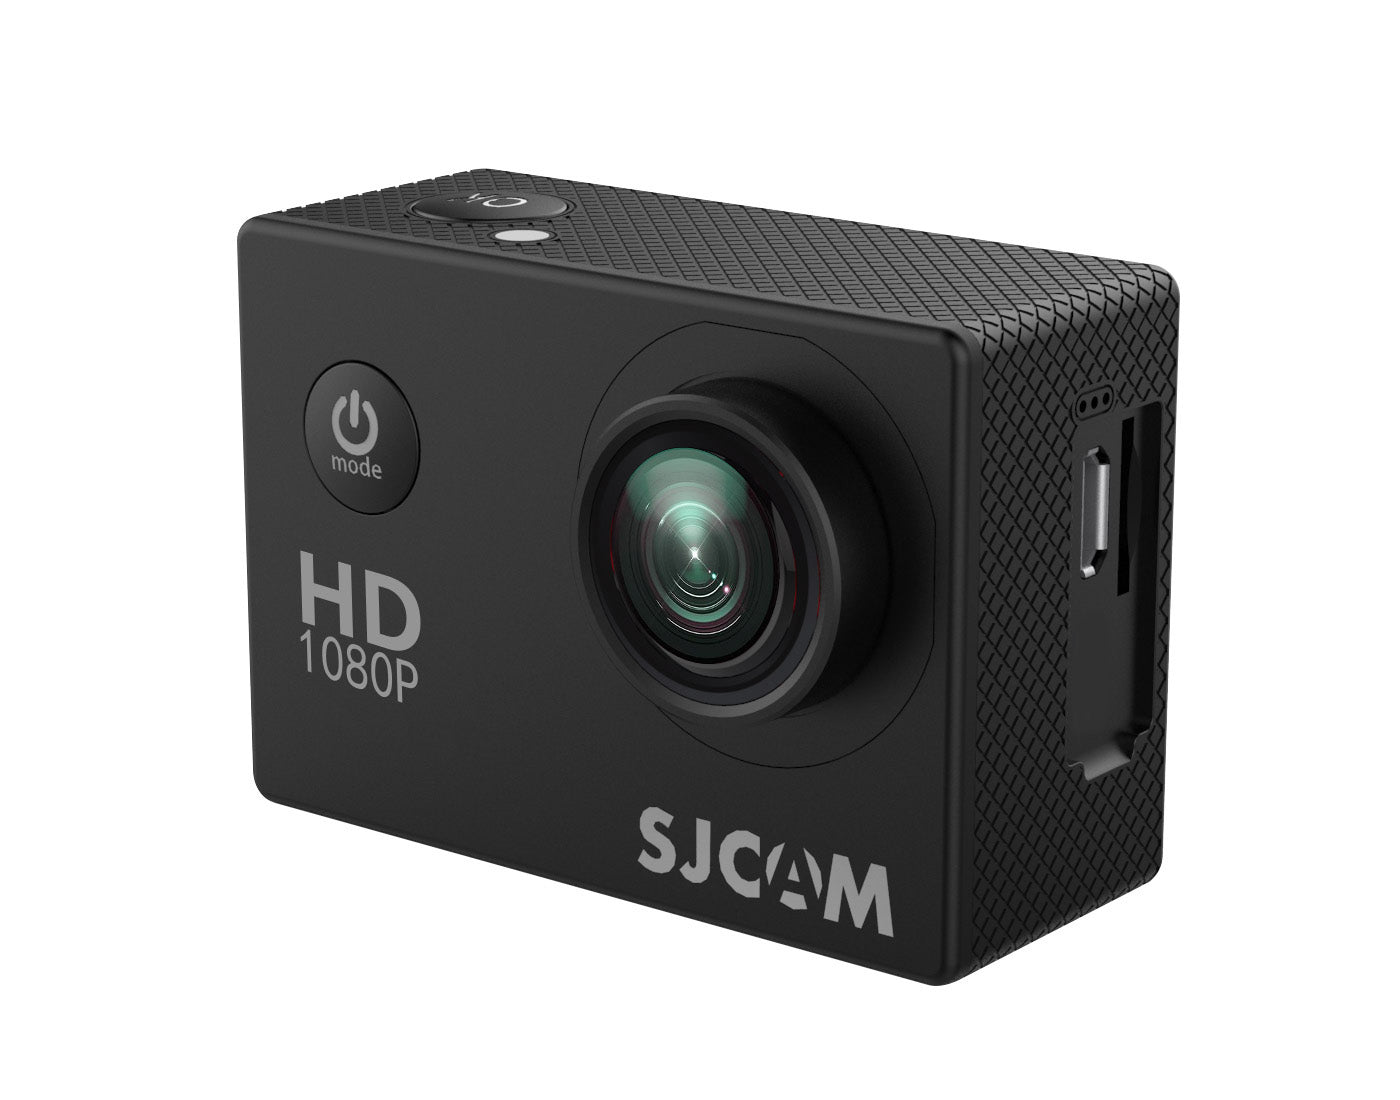 SJCAM SJ4000 Action Camera 30M Underwater Waterproof FHD 1080p